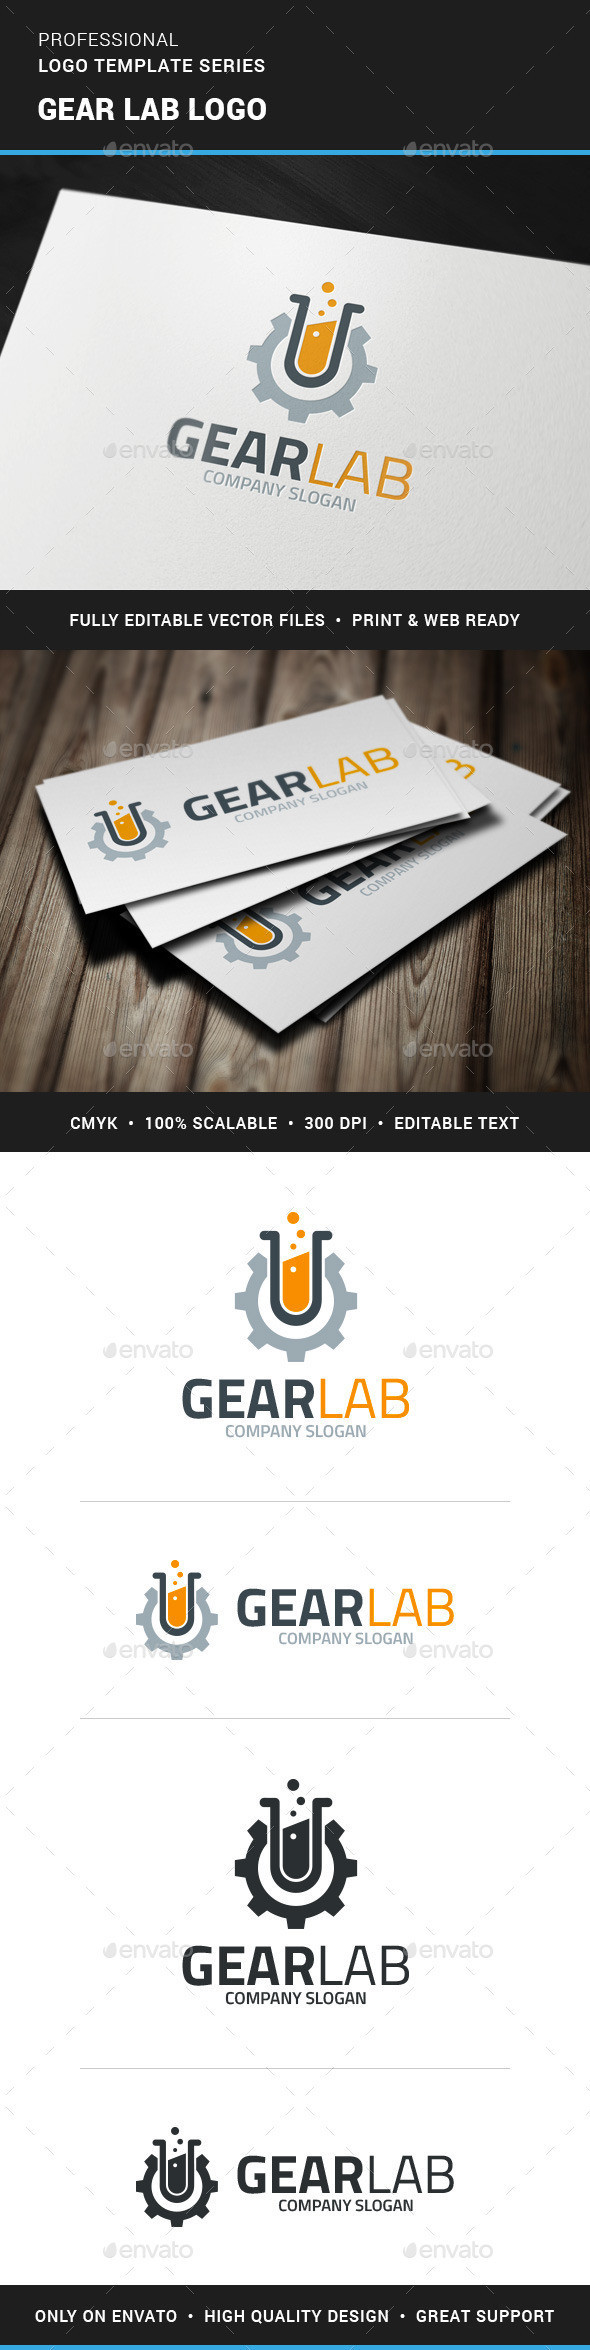 Gear lab logo template